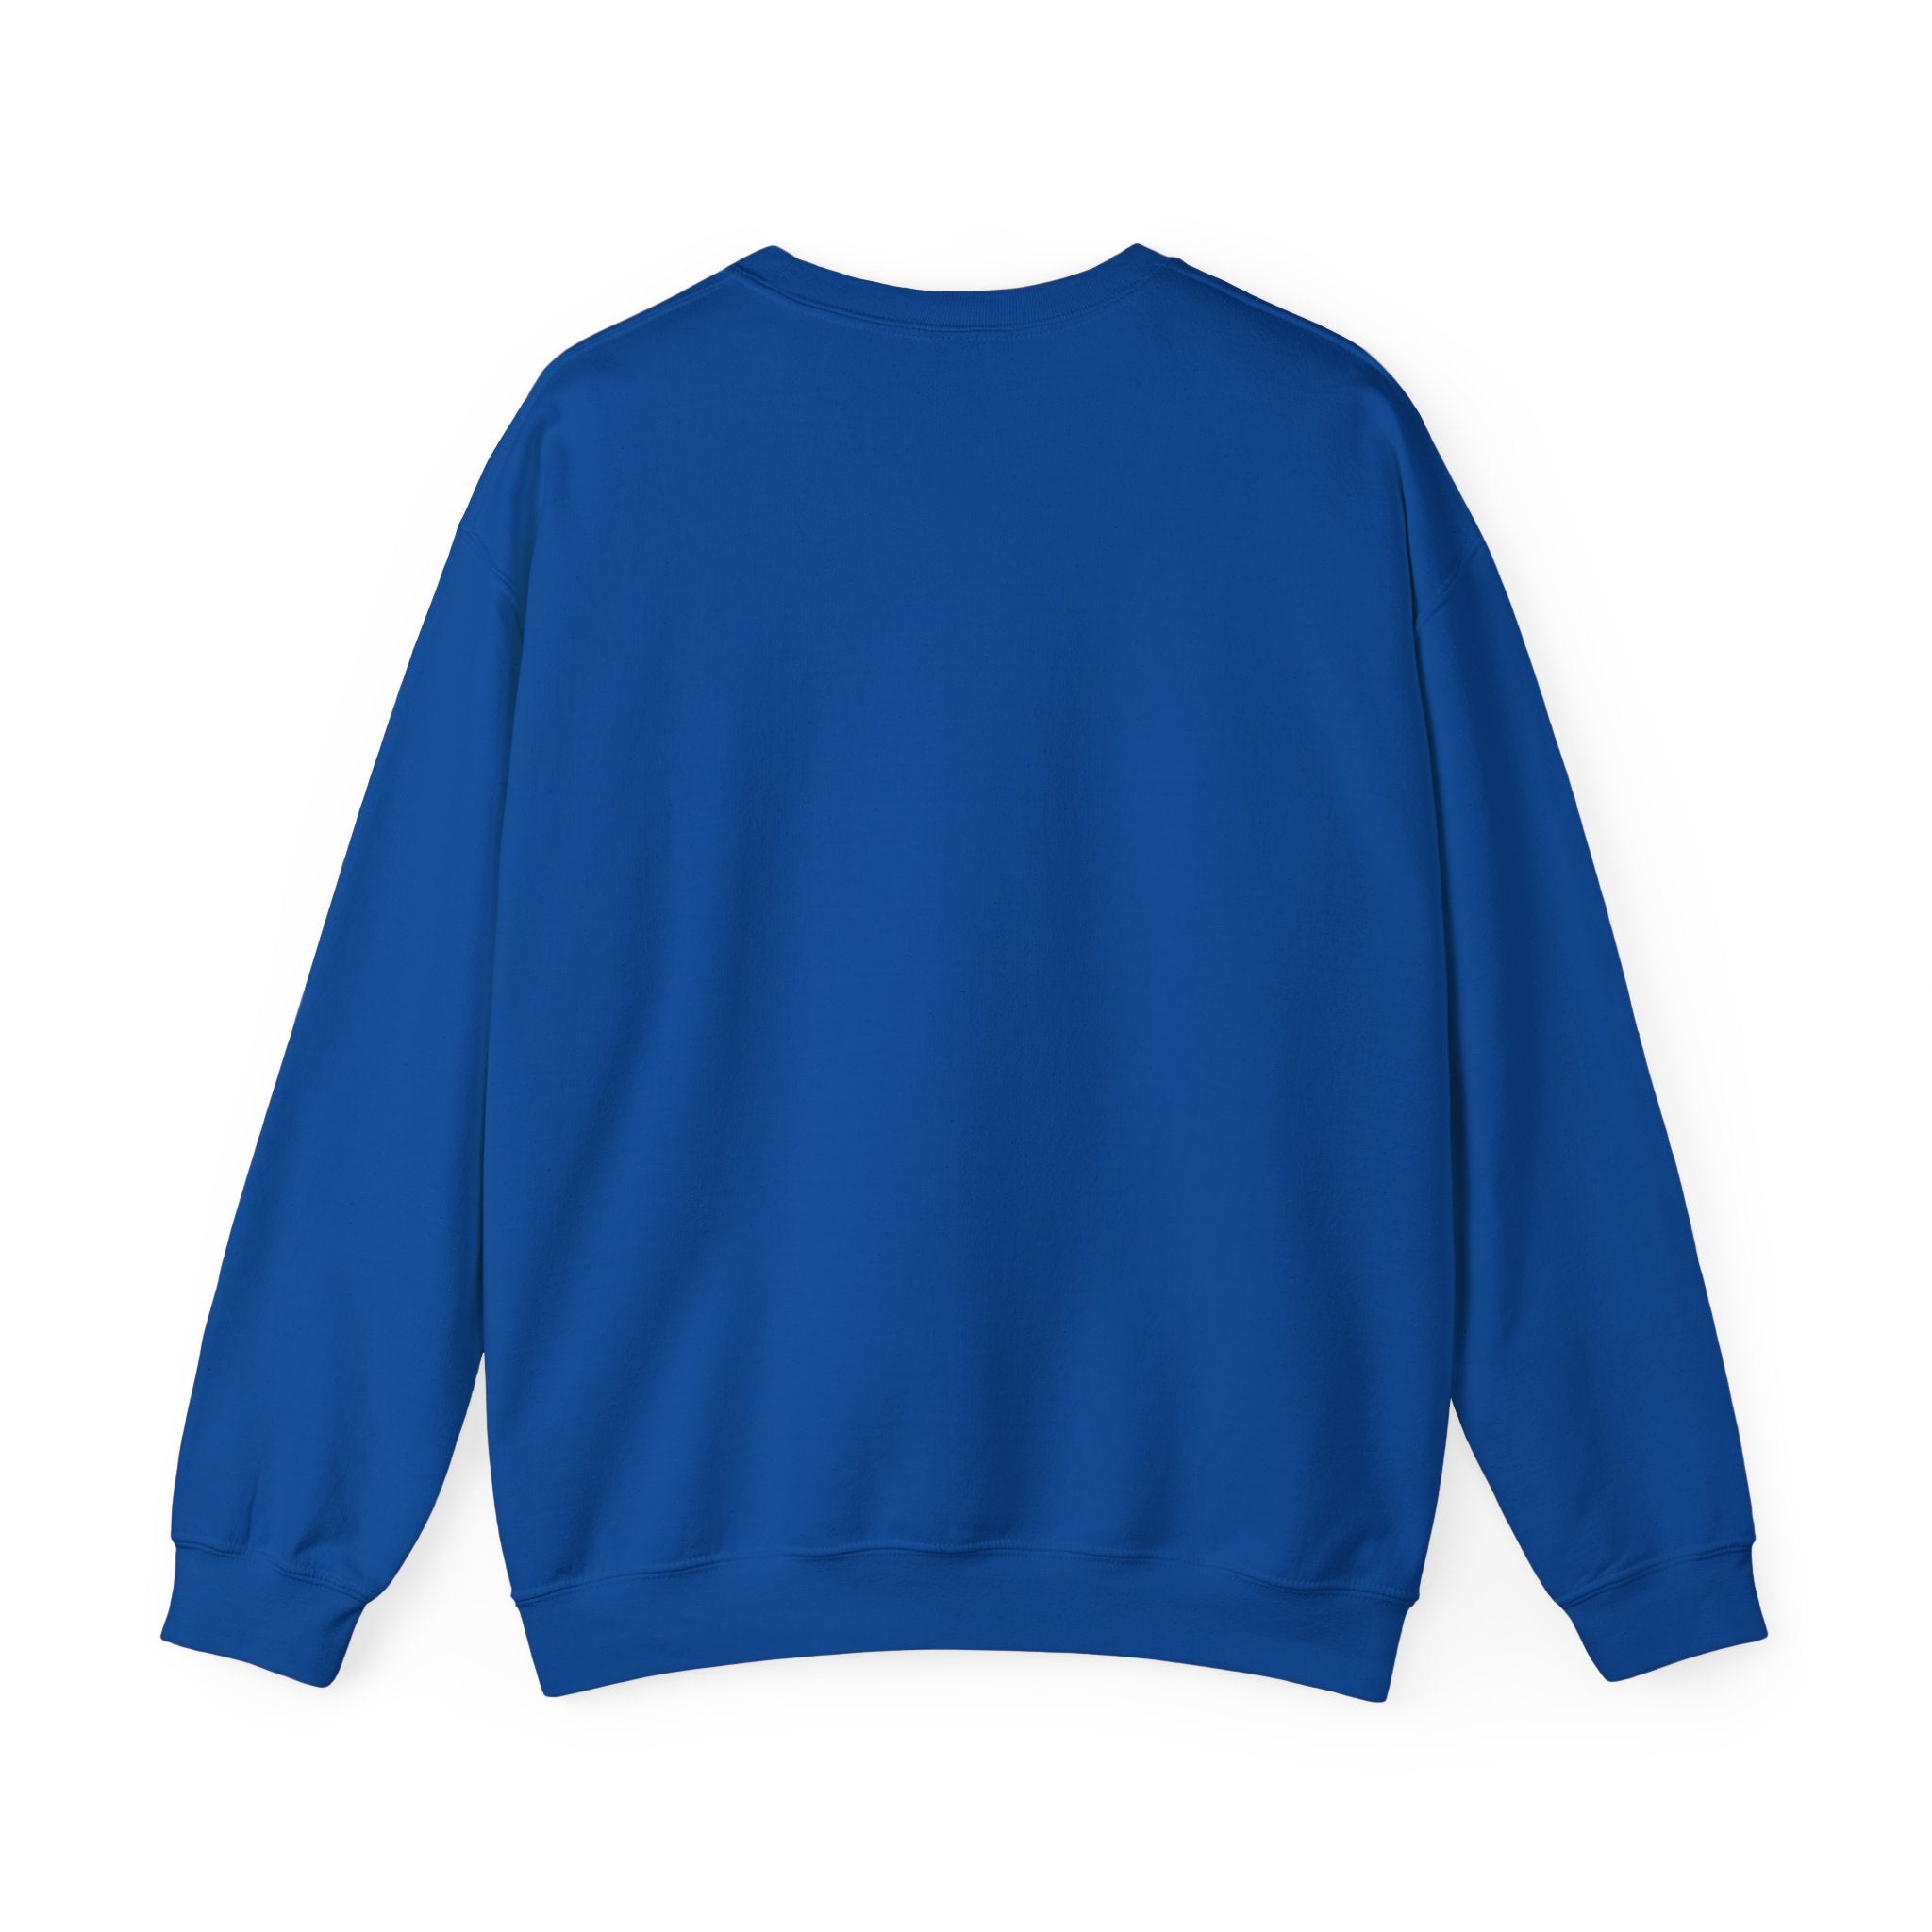 Gildan Sweatshirt | BASEBALL MOM